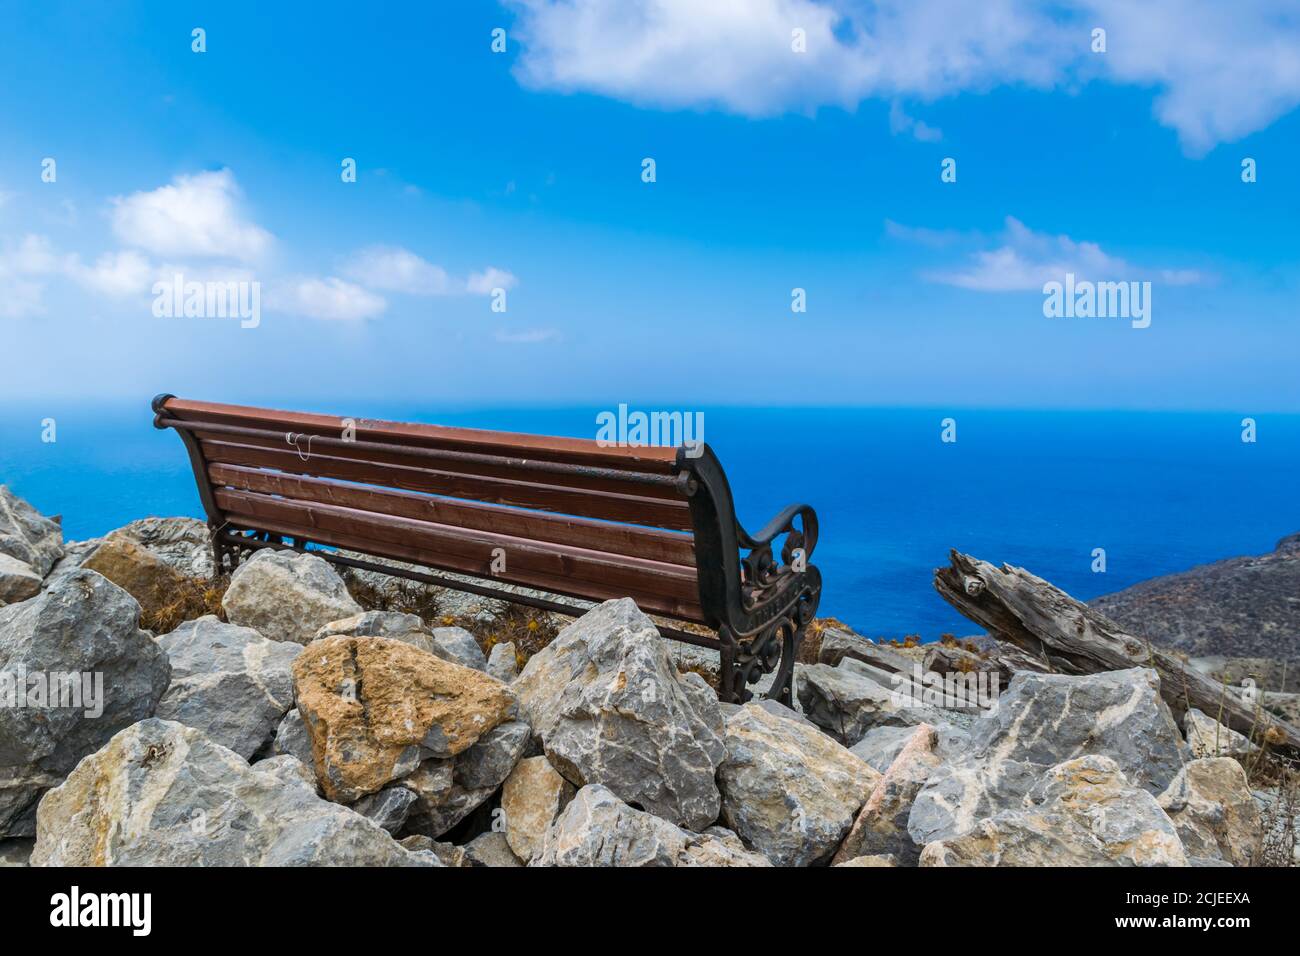 Wooden Bench on Hill Peak Overlooking Aegean Sea, Olympos, Karpathos, Greece Stock Photo